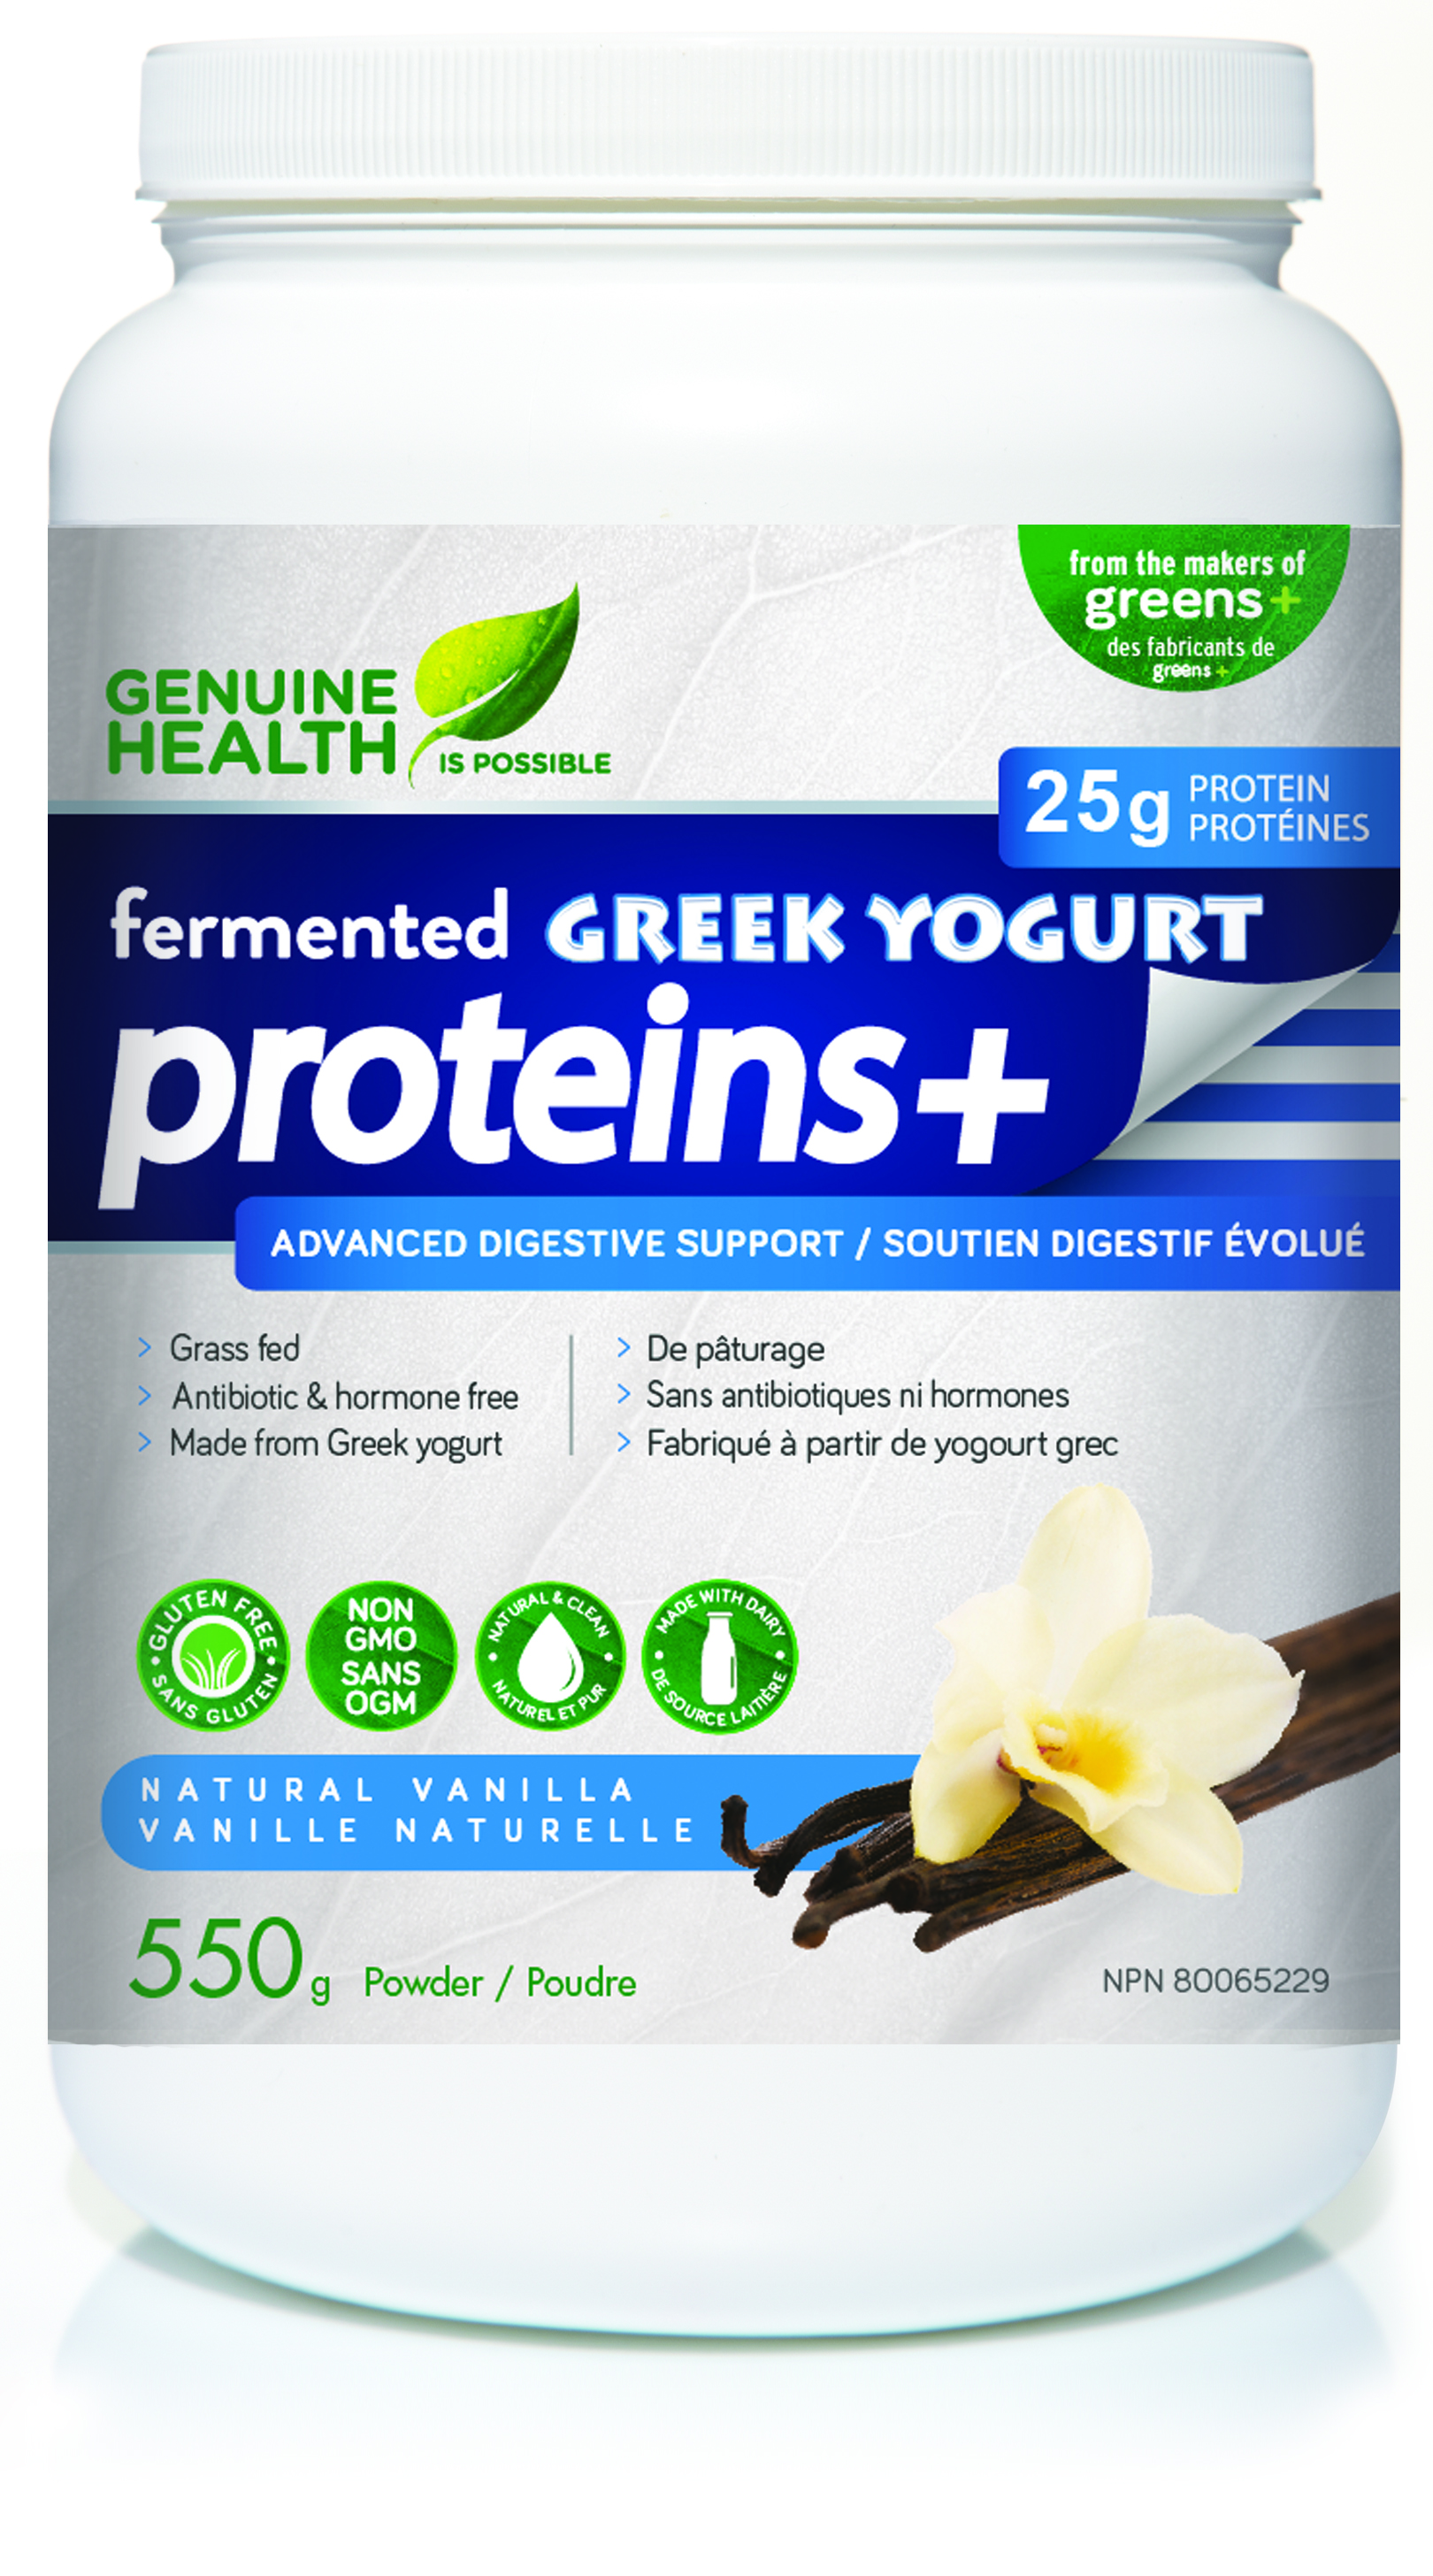 8429-fermented_greek_yogurt_proteins+_vanilla R00